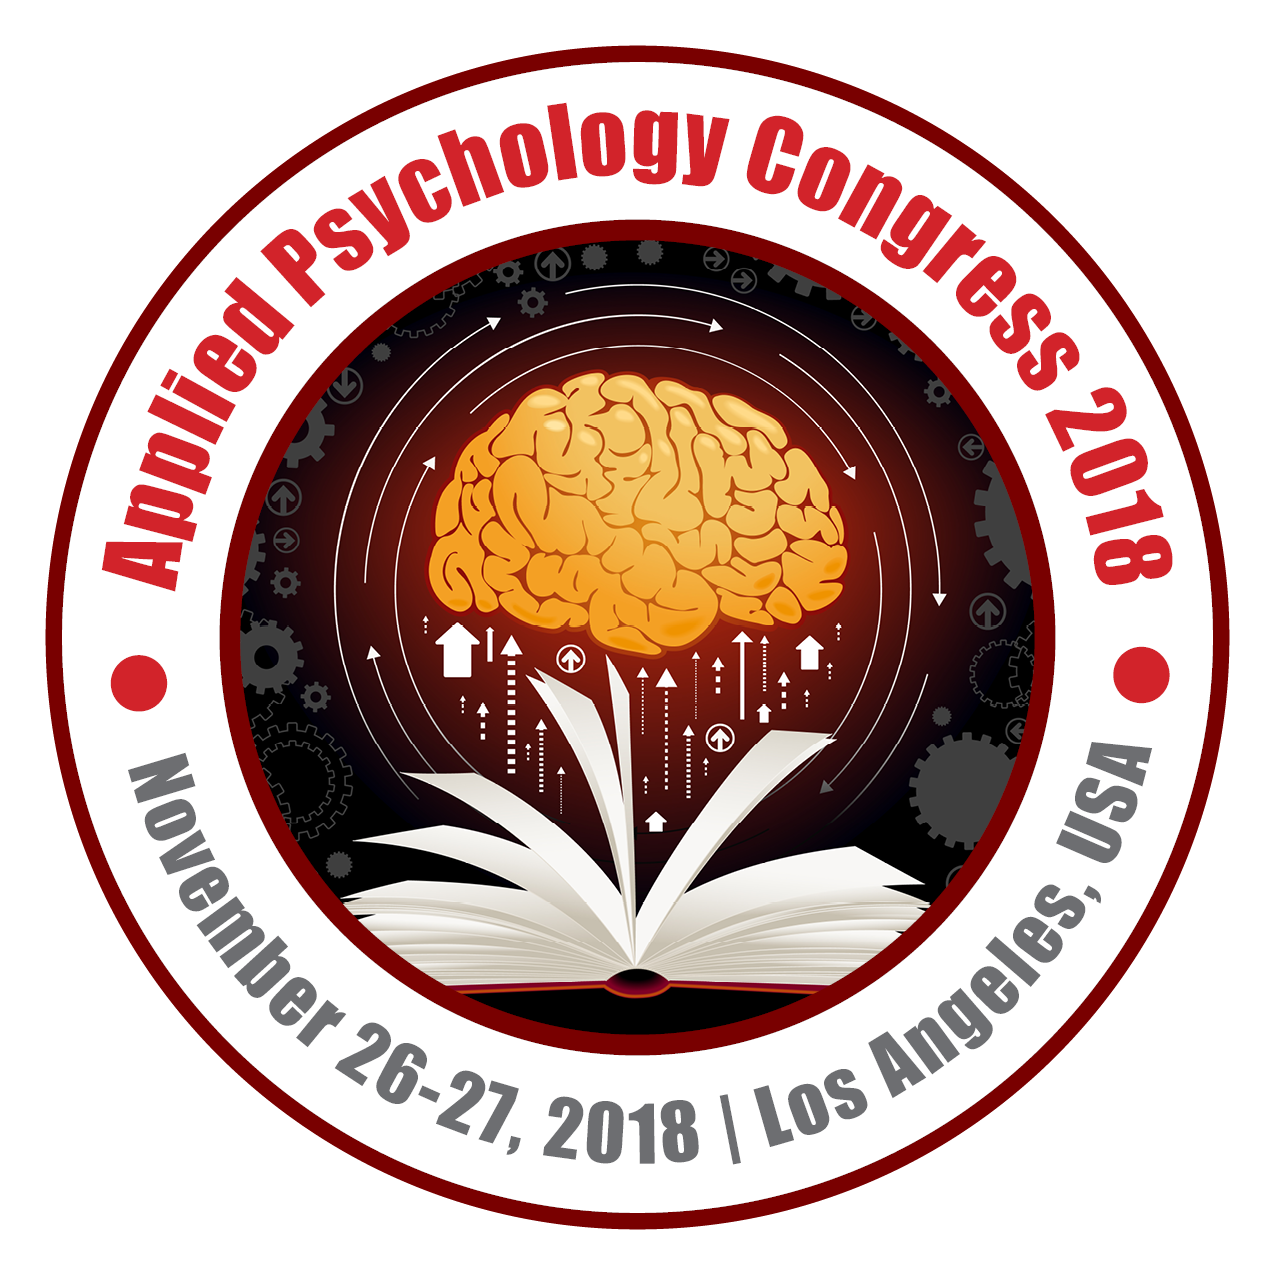 Applied Psychology congress 2018